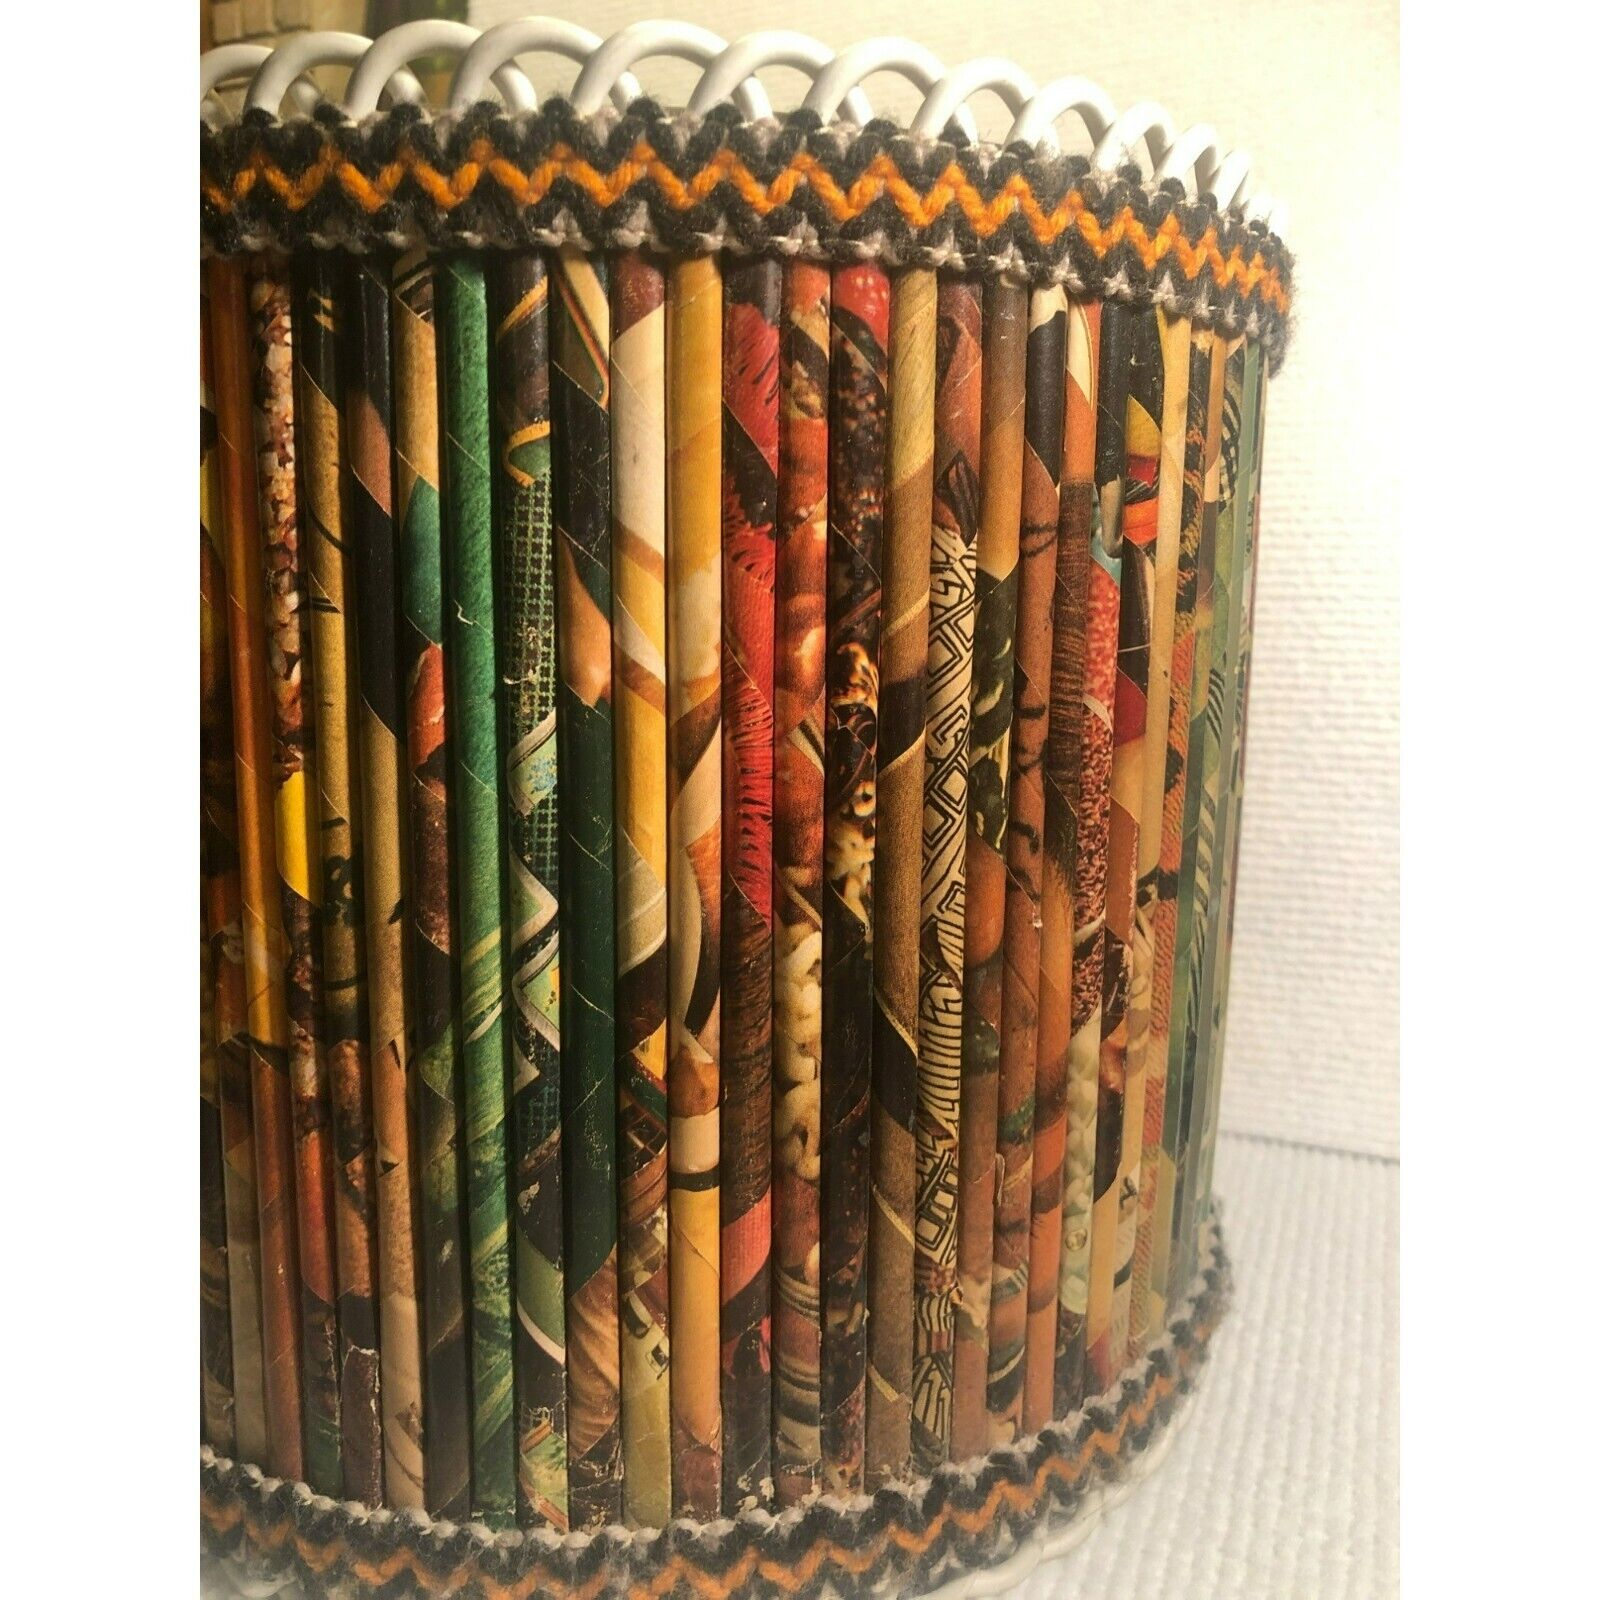 Vintage 1960's Rolled Paper Art Basket, Waste Basket, Handcrafted, Recycle, MCM